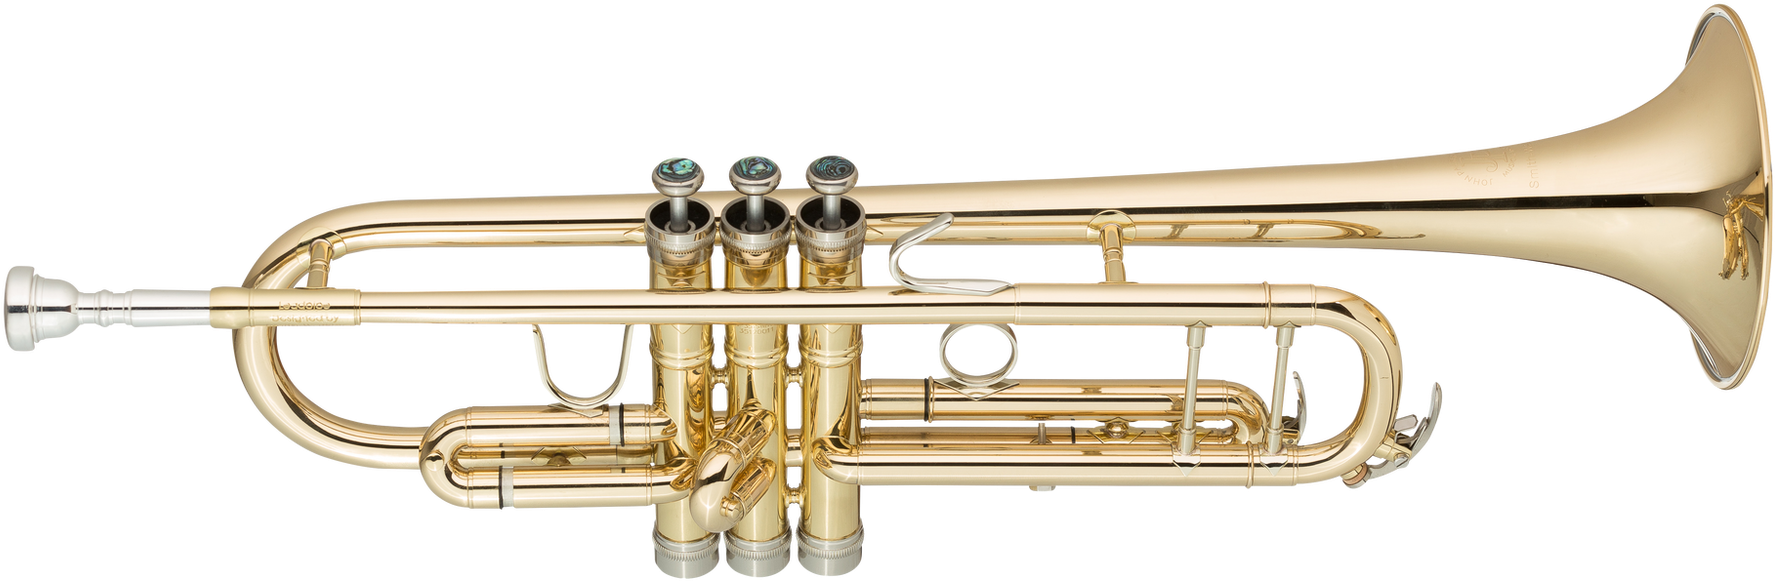 Brass Trumpet Isolatedon Background